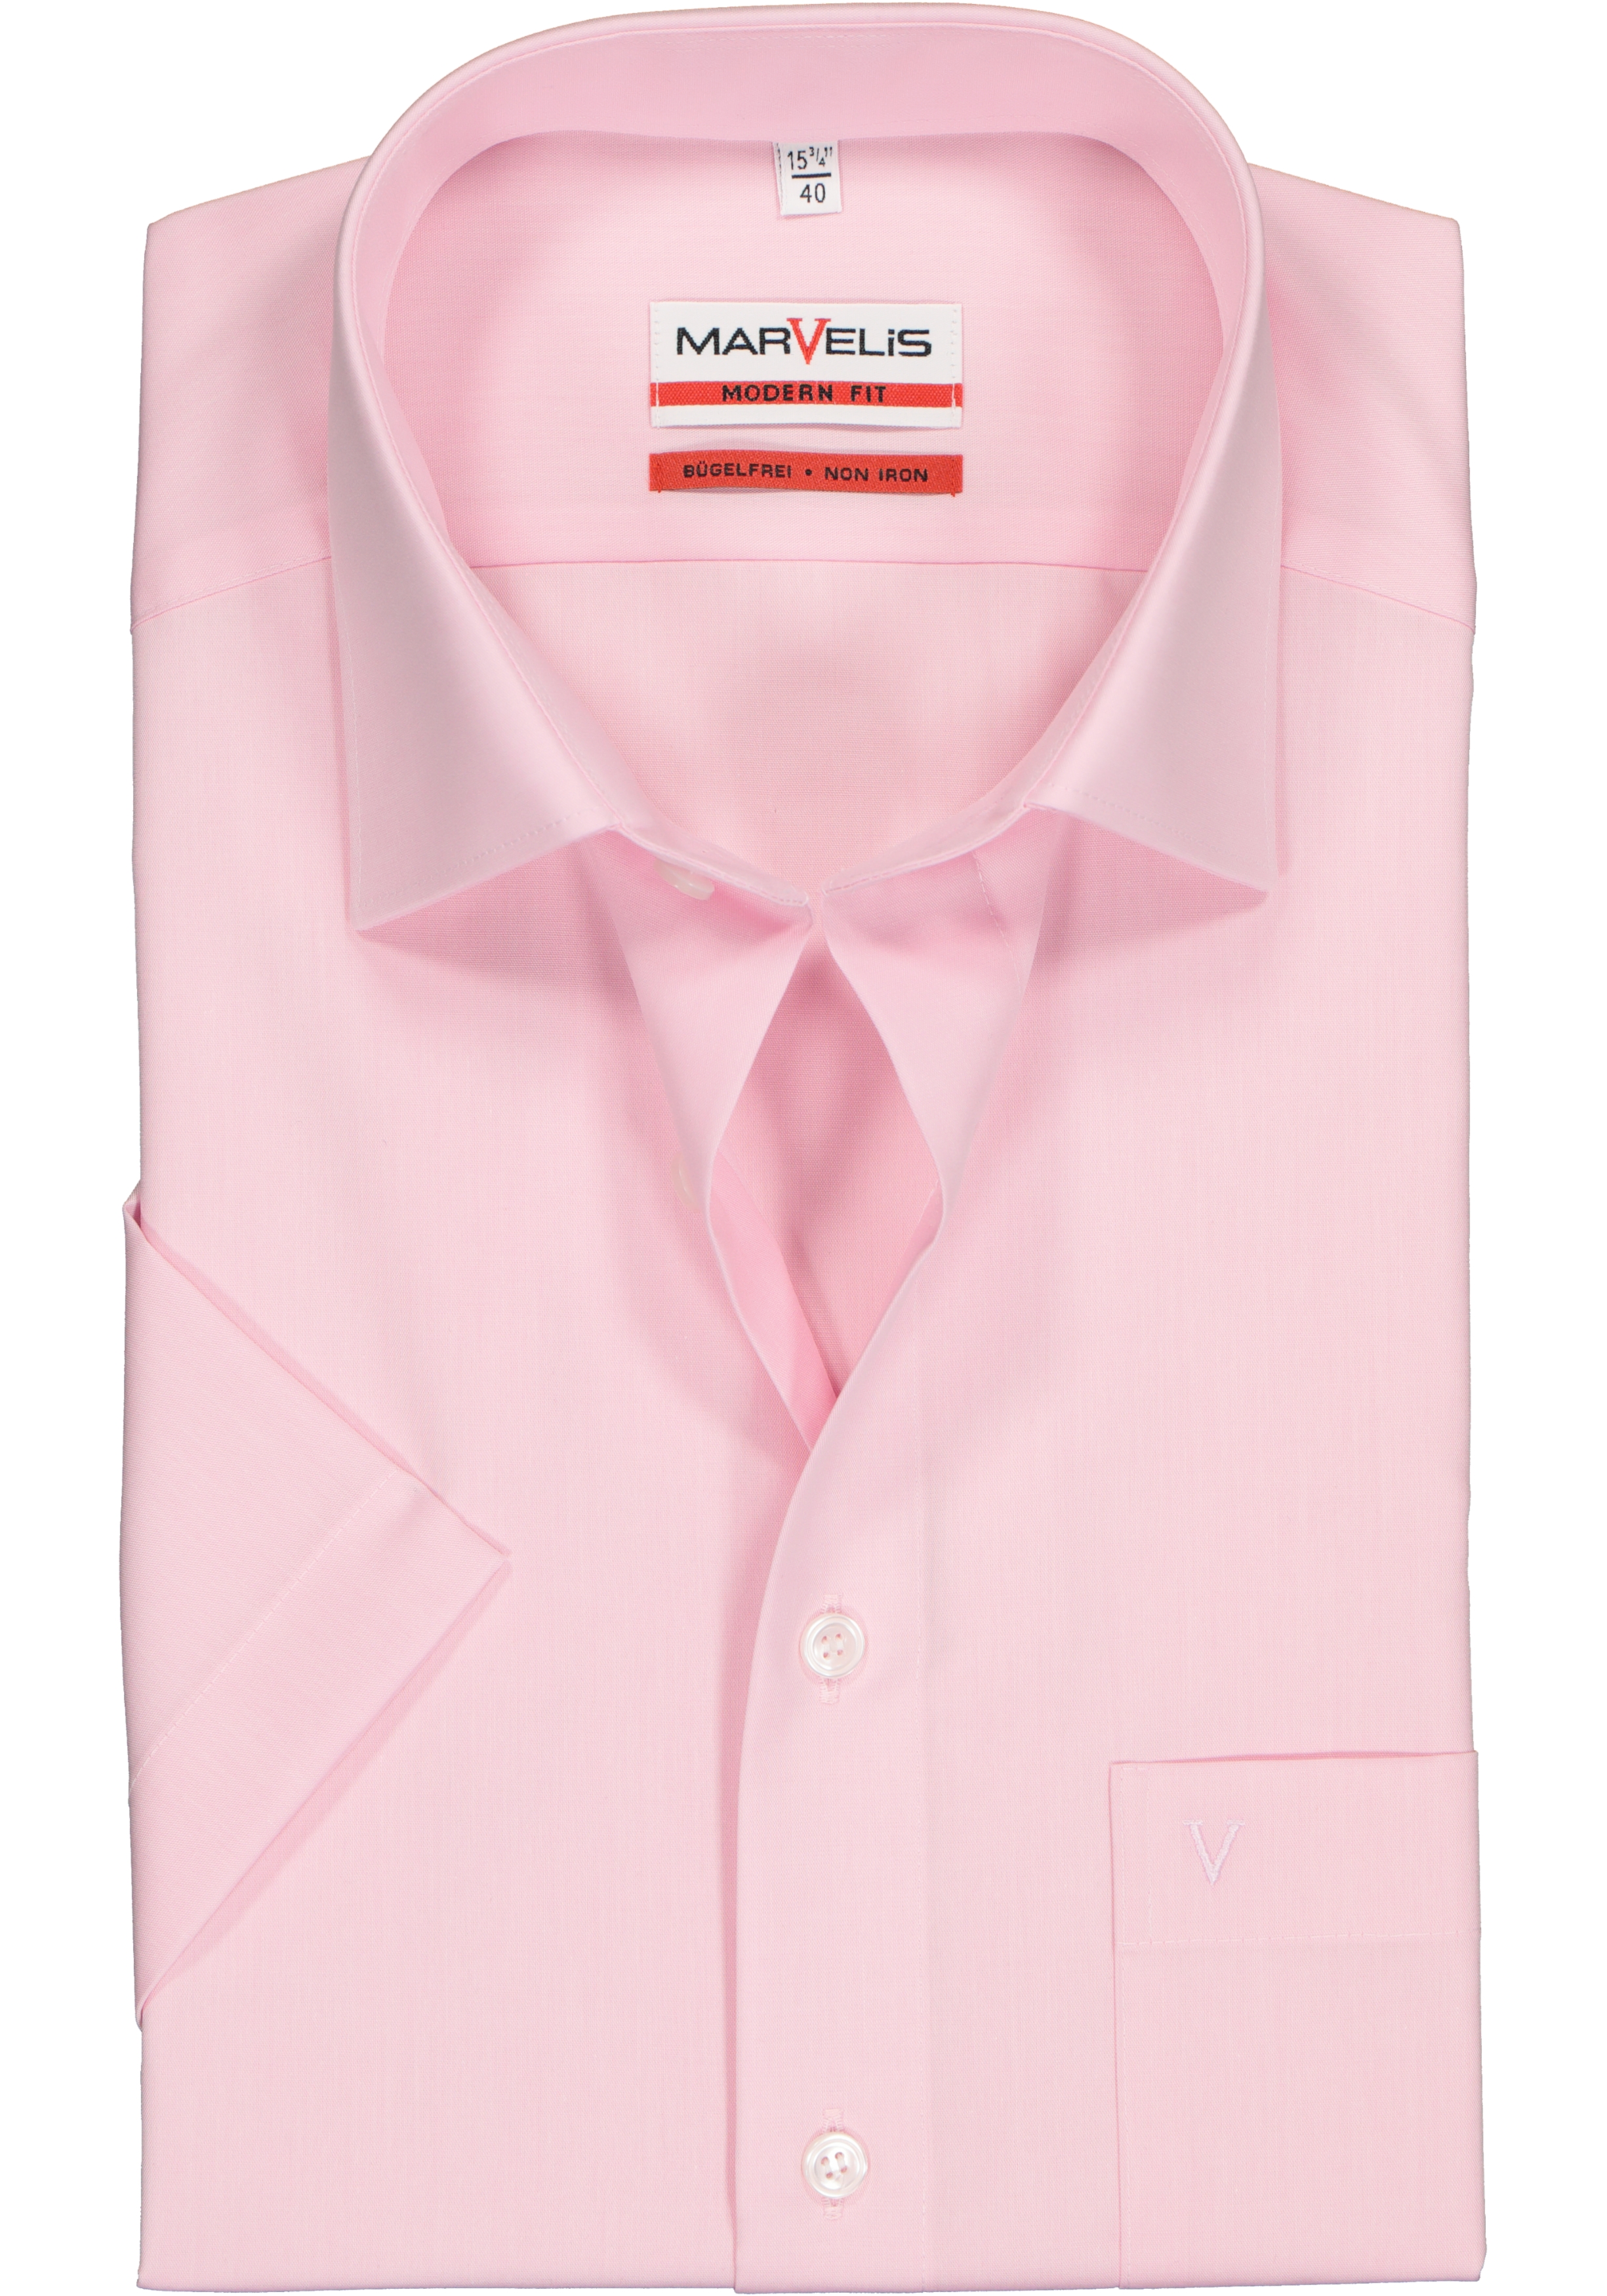 MARVELIS modern fit overhemd, korte mouw, roze 